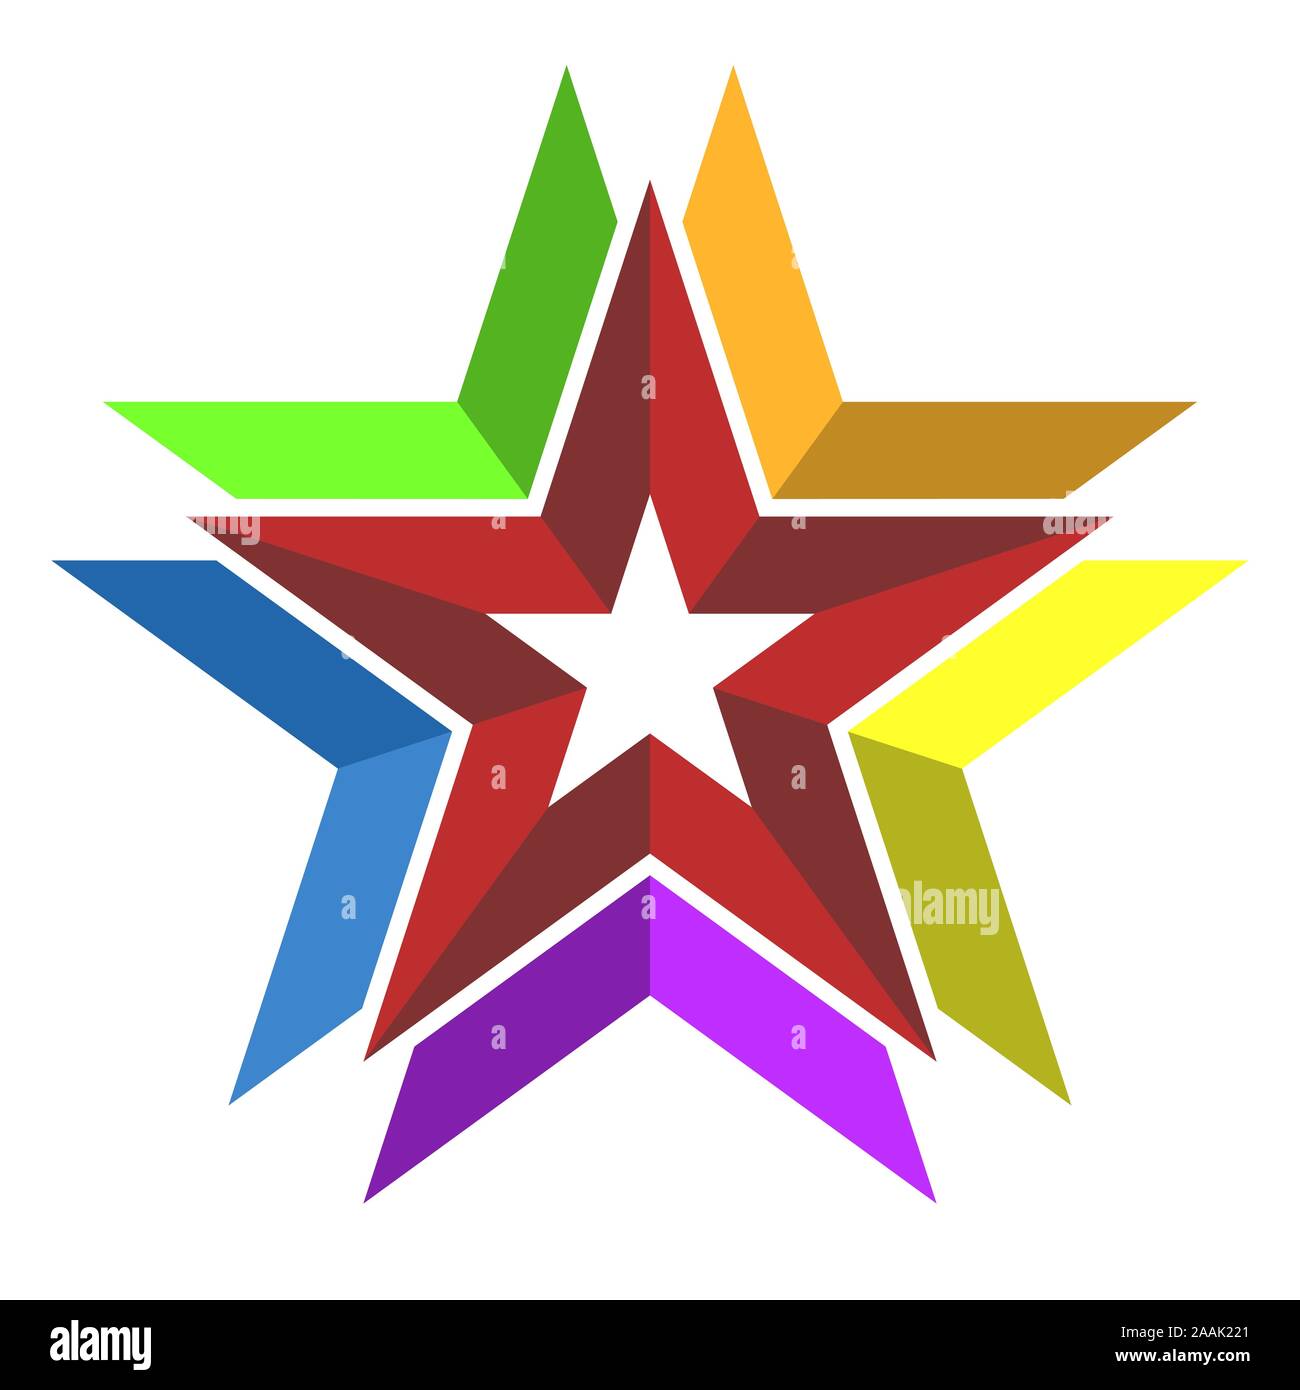 https://c8.alamy.com/comp/2AAK221/multicolor-3d-star-symbol-or-icon-geometric-style-vector-illustration-2AAK221.jpg